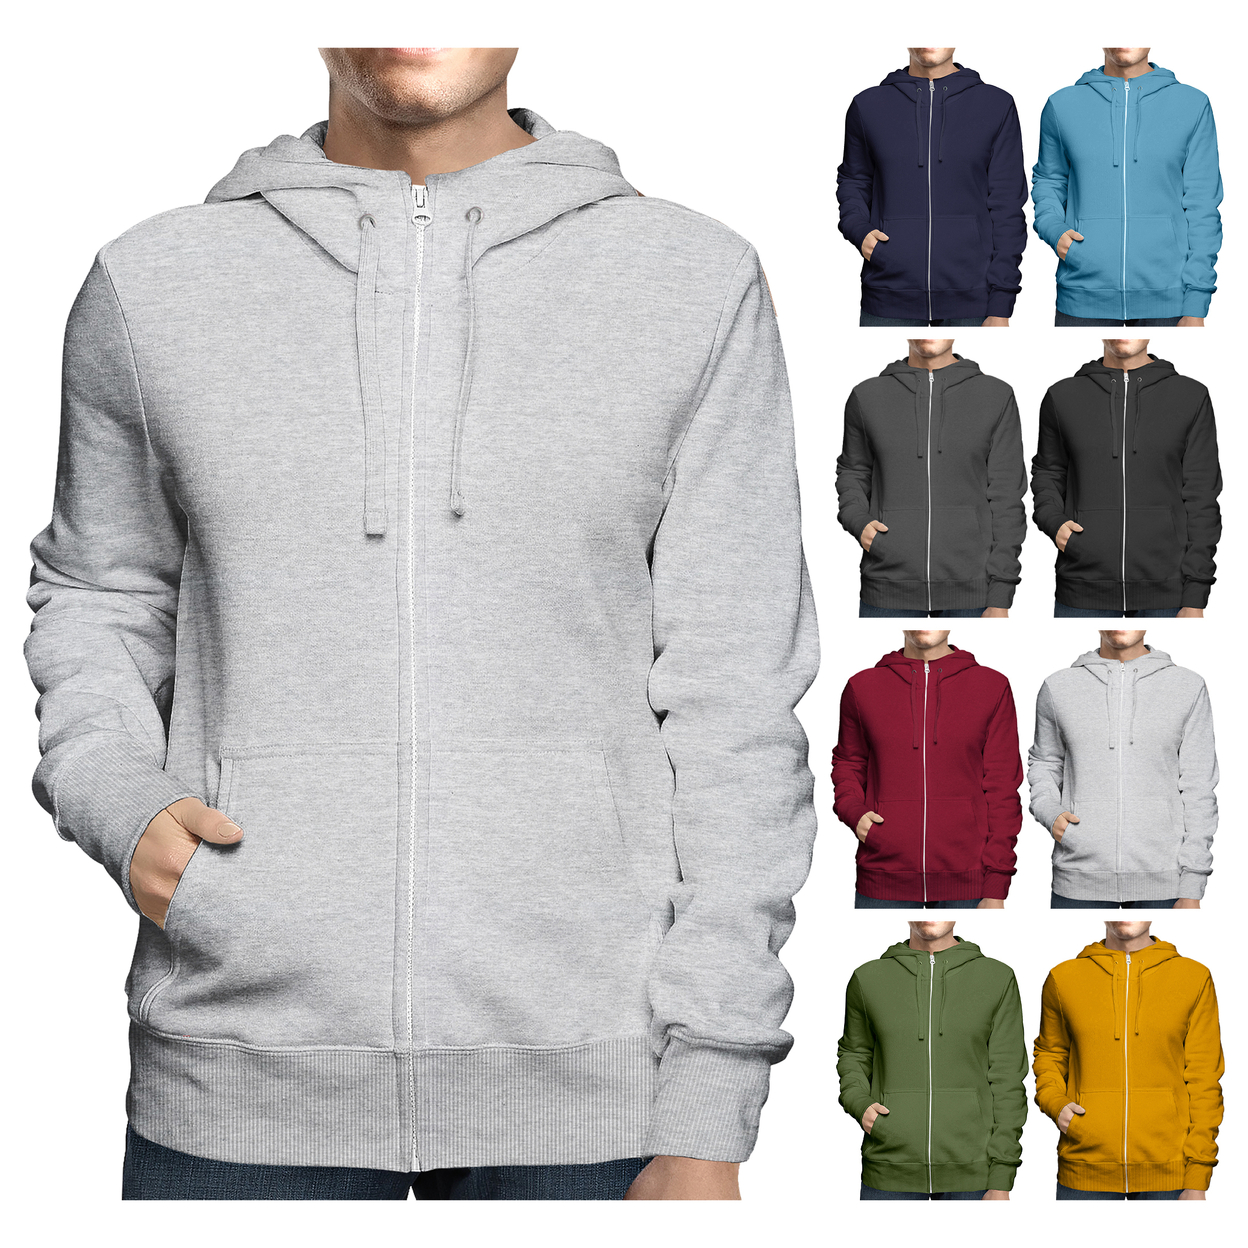 2-Pack: Men's Winter Warm Soft Full Zip-Up Fleece Lined Hoodie Sweatshirt - Black & Charcoal, Large